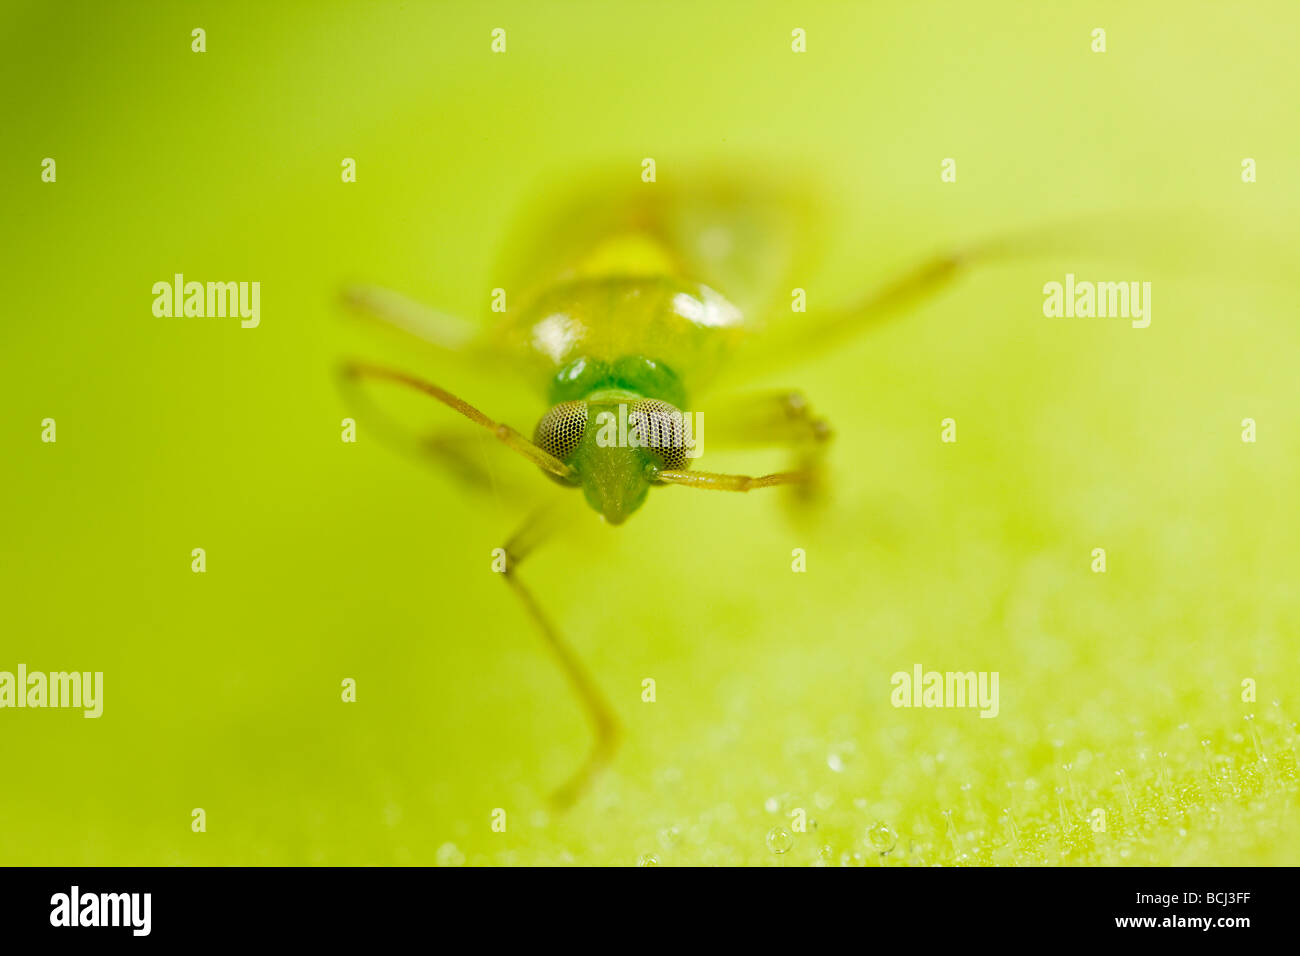 Mirid Anlage Bug (Miridae) bei ca. 3 X Vergrößerung Stockfoto